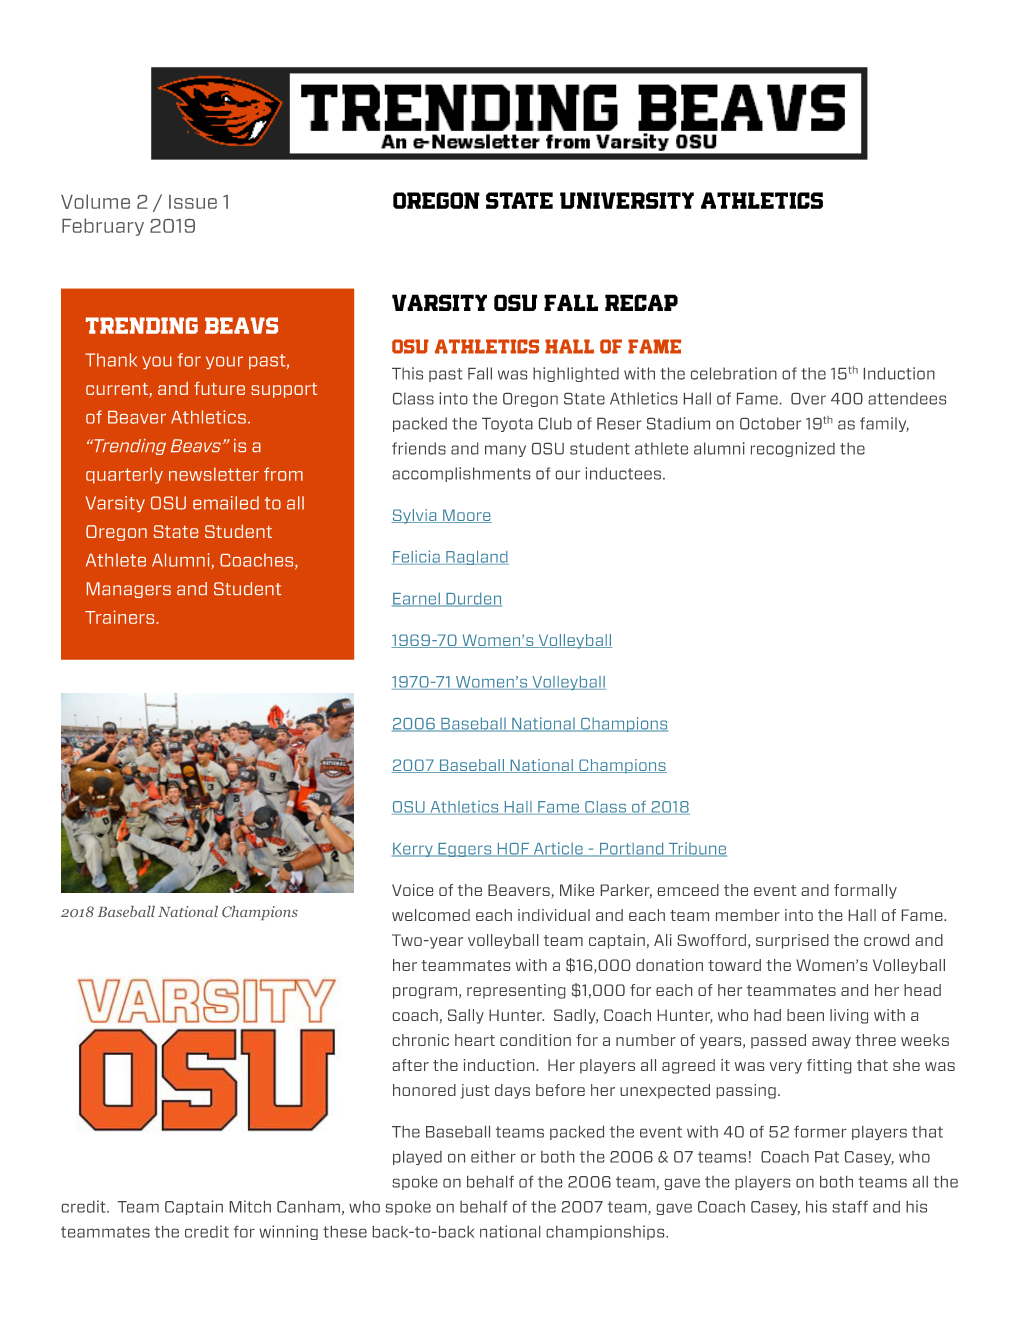 Oregon State University Athletics VARSITY OSU FALL RECAP